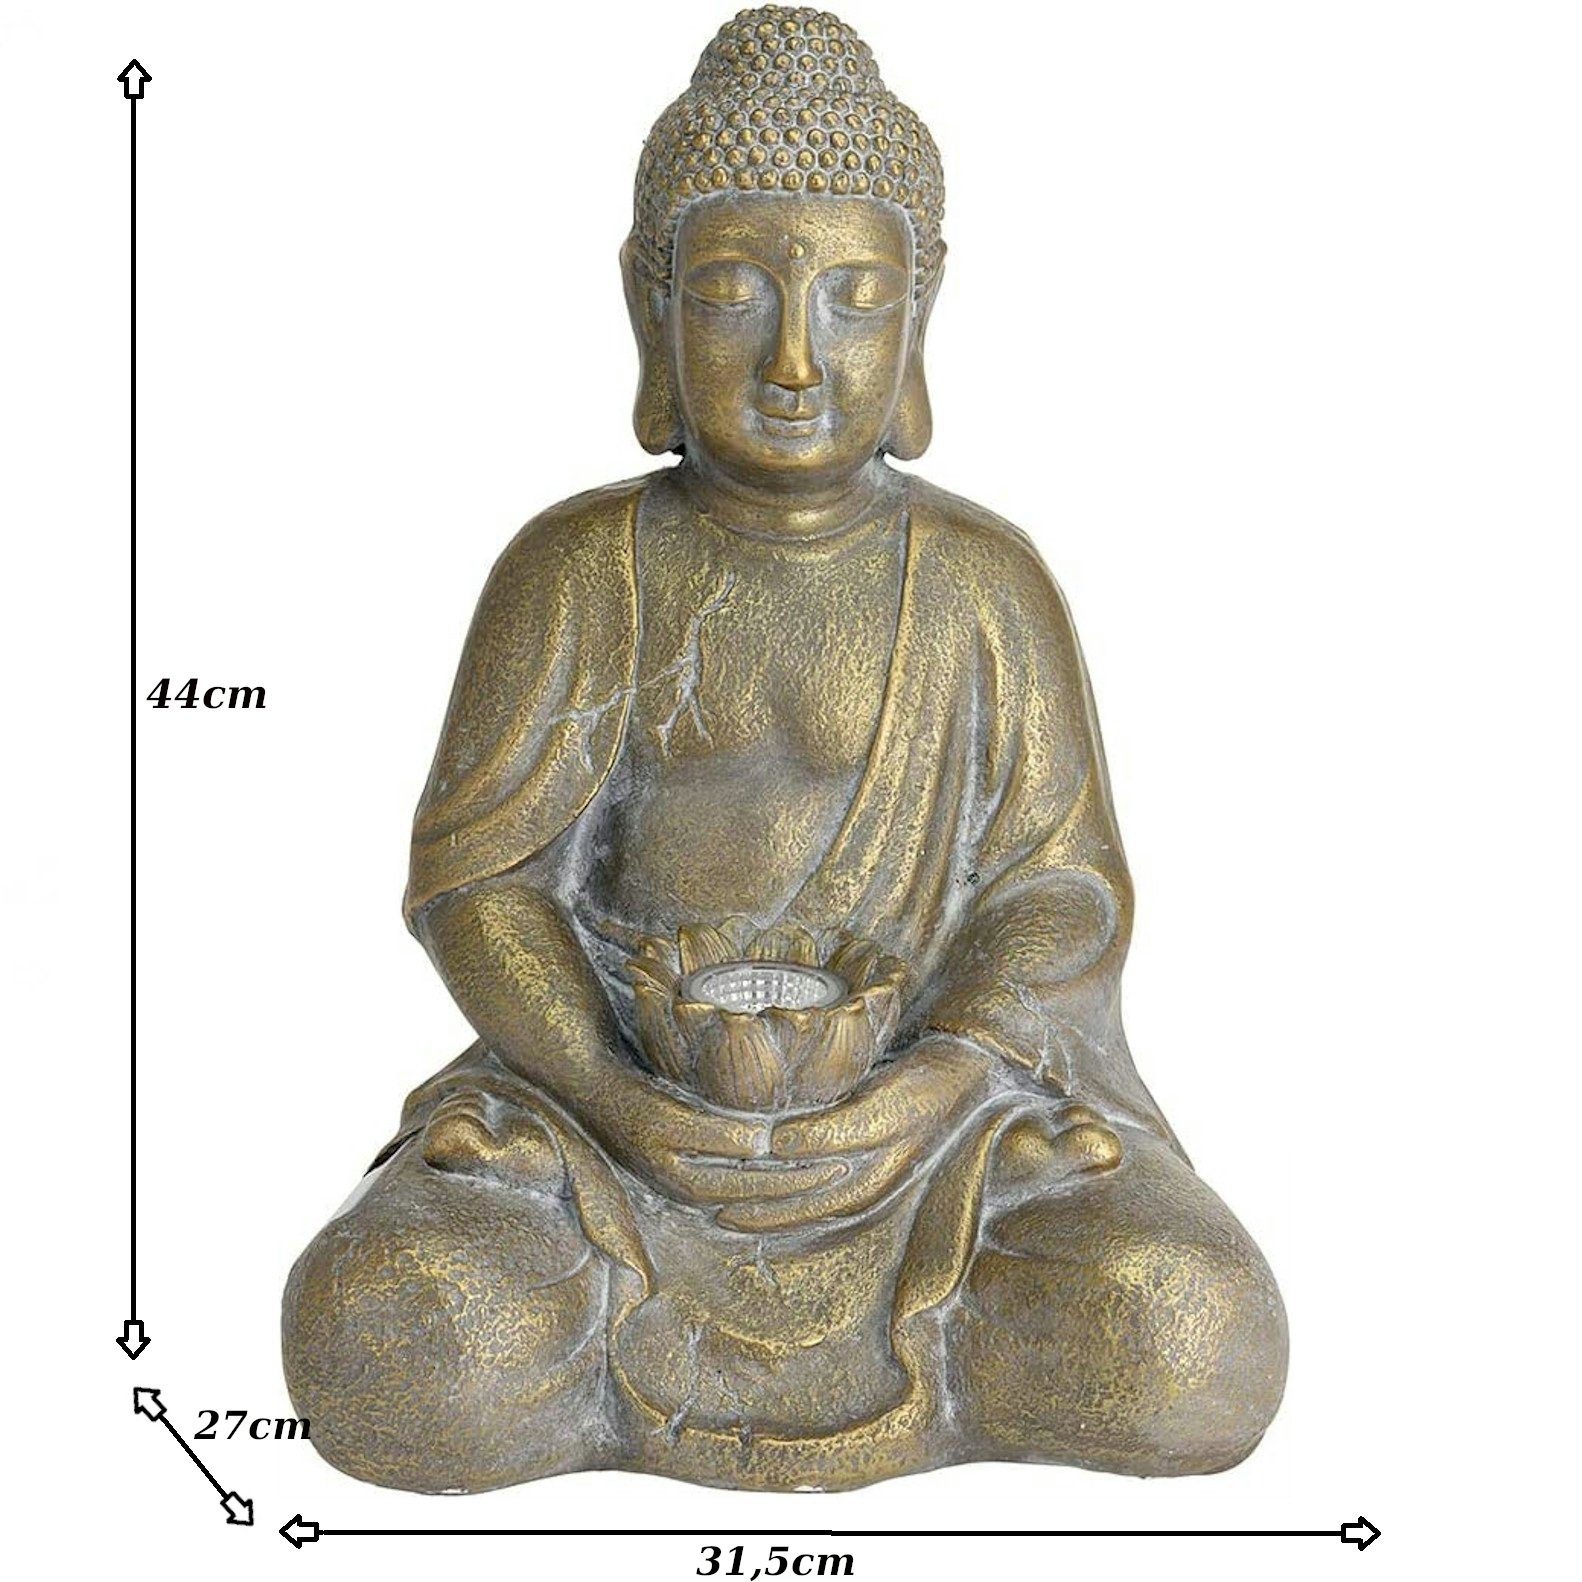 INtrenDU Gartenfigur Garten Buddha Figur 44cm mit Solarbeleuchtung und Sensorautomatik, Sensorautomatik